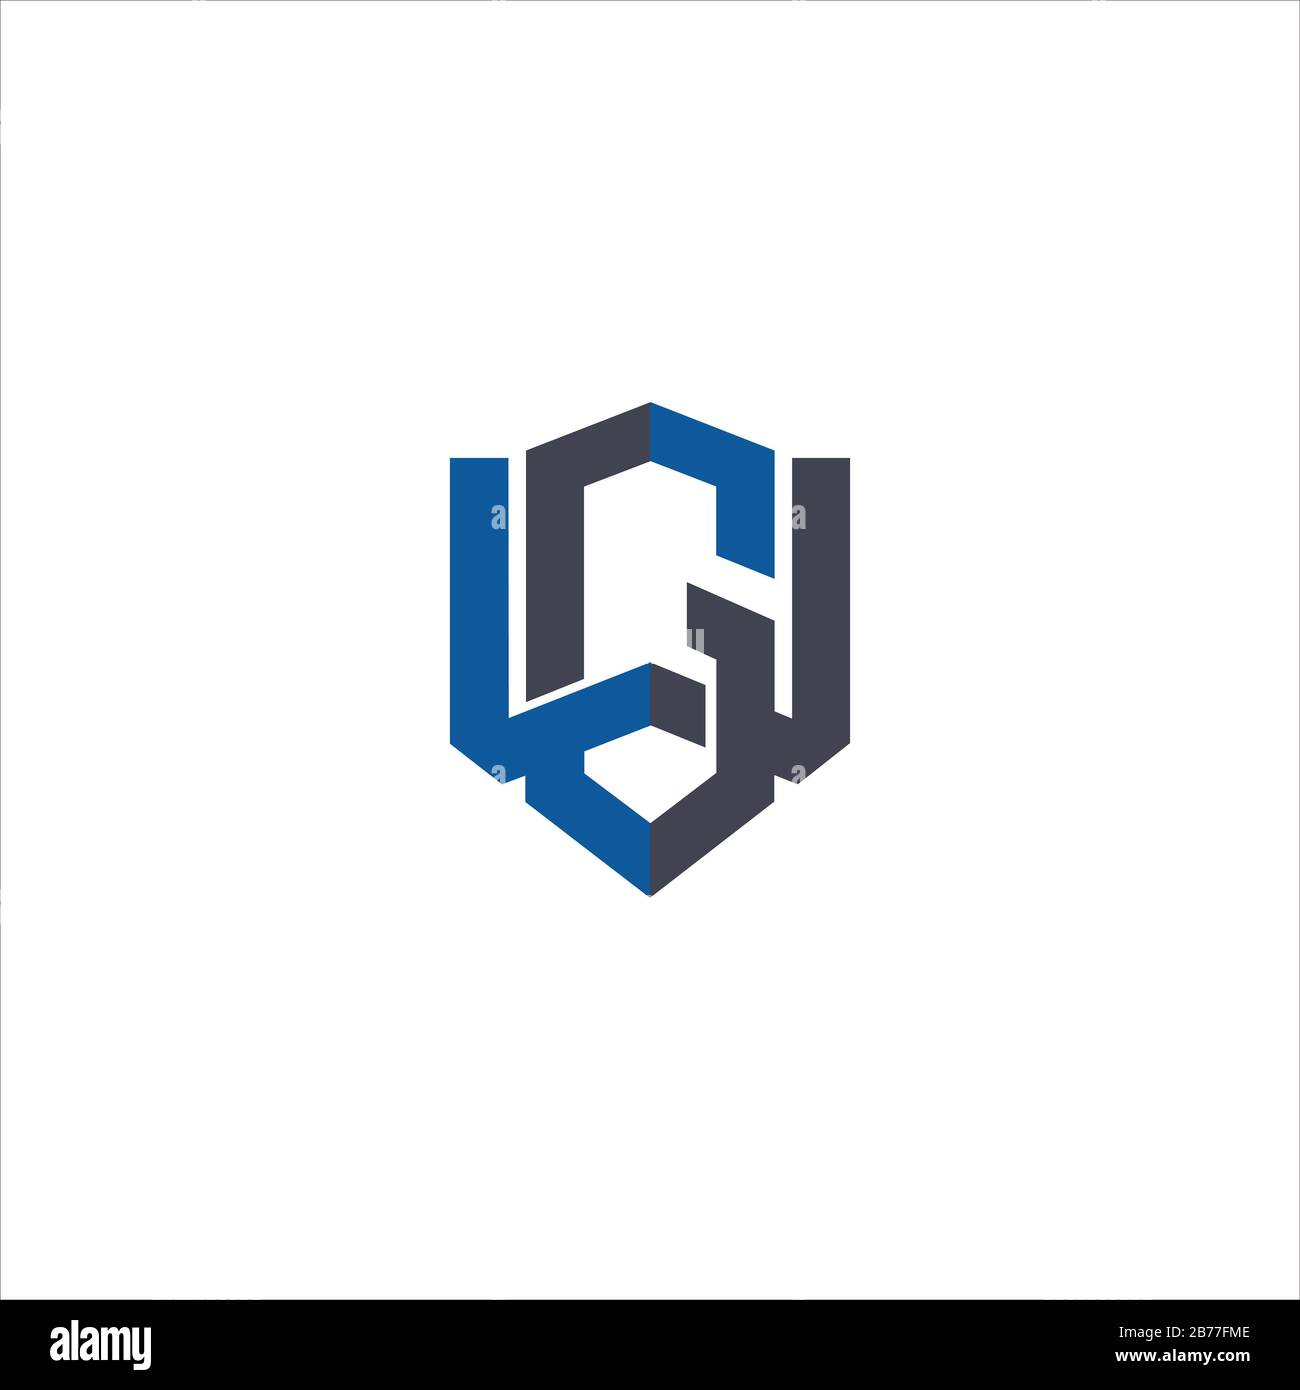 Letter Wg Gw Linked Logo Design Stock Vector (Royalty Free